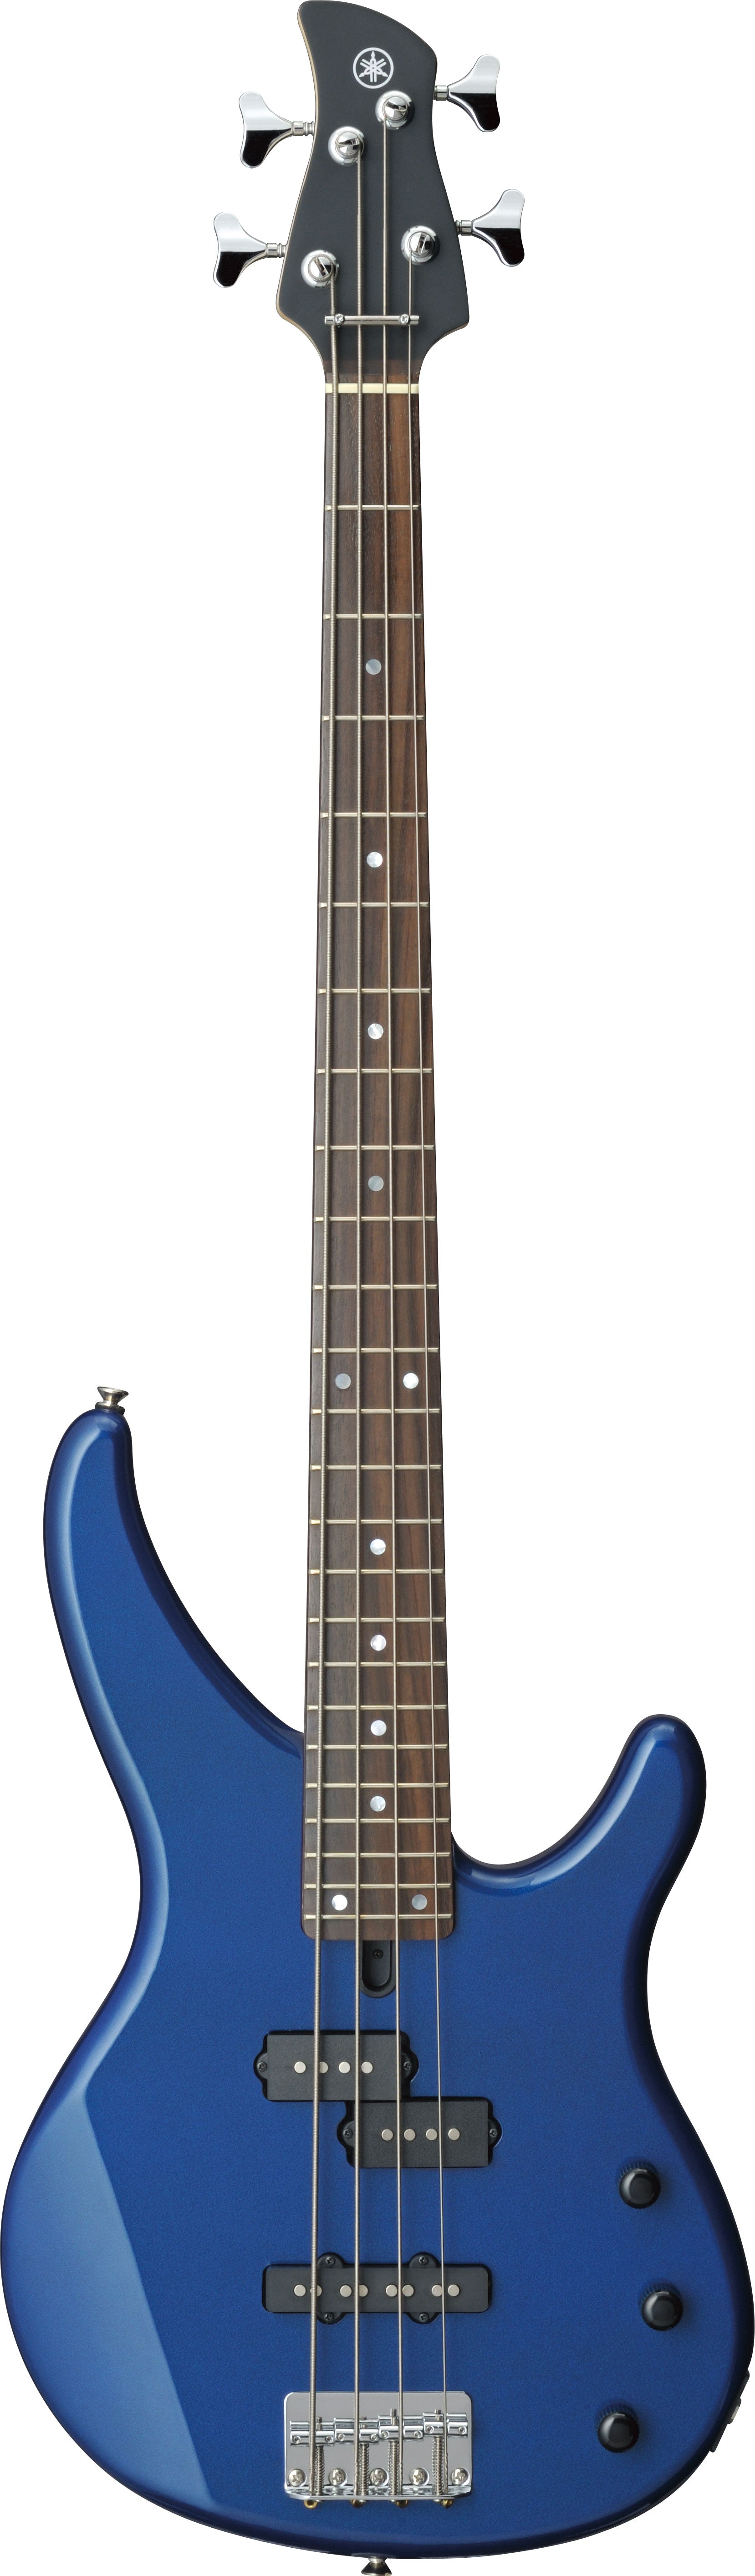 Yamaha TRBX174 DBM 4 String Bass - Dark Blue Metallic